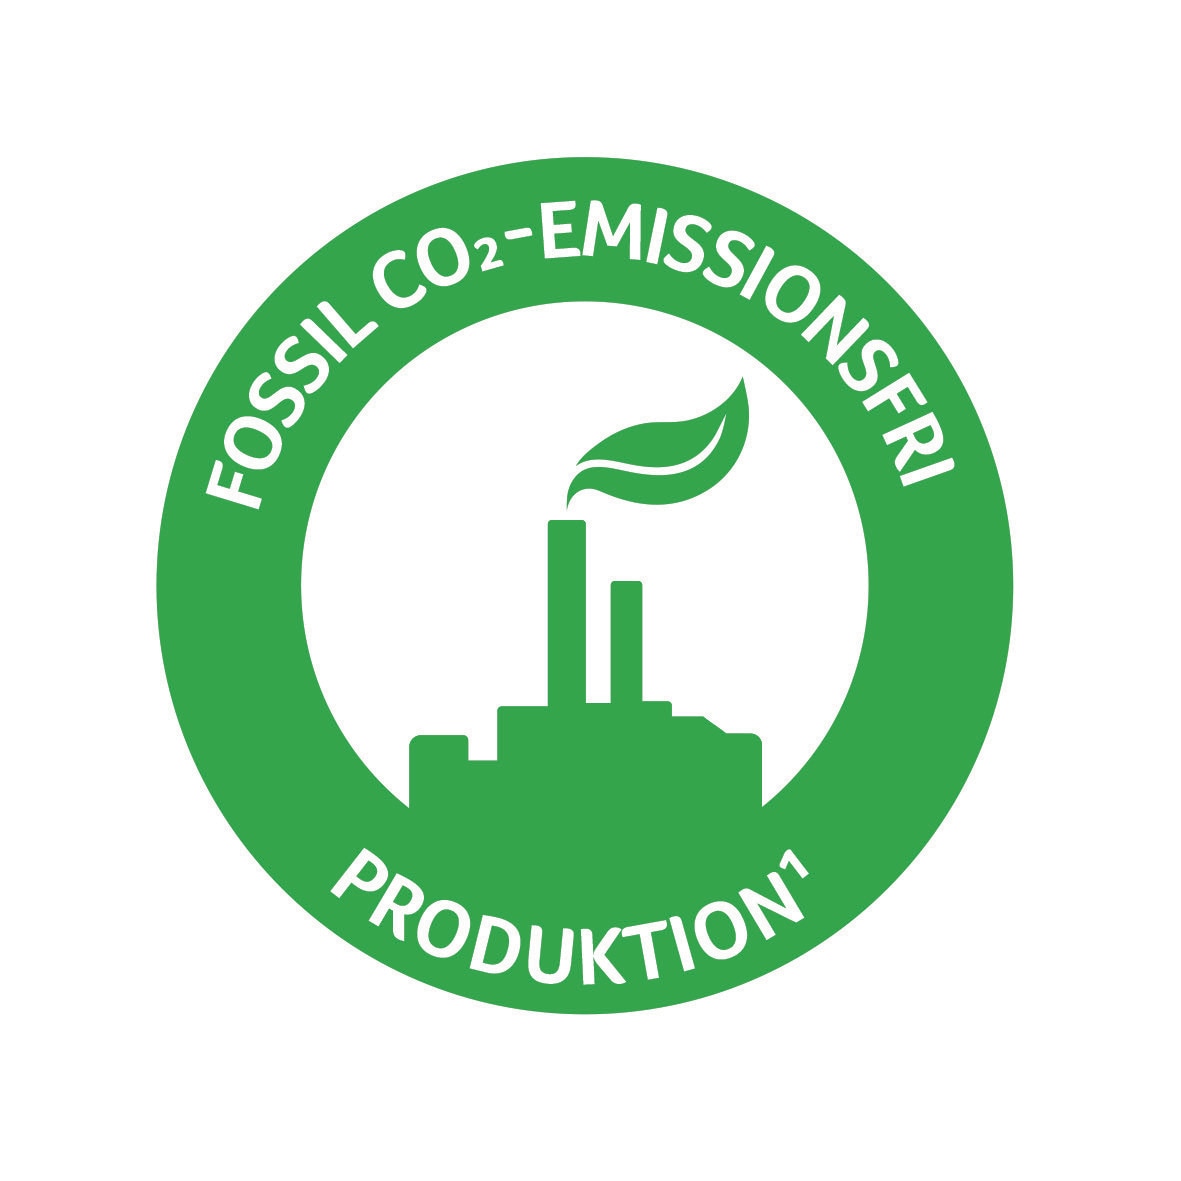 Fossil CO2-emissionsfri produktion*